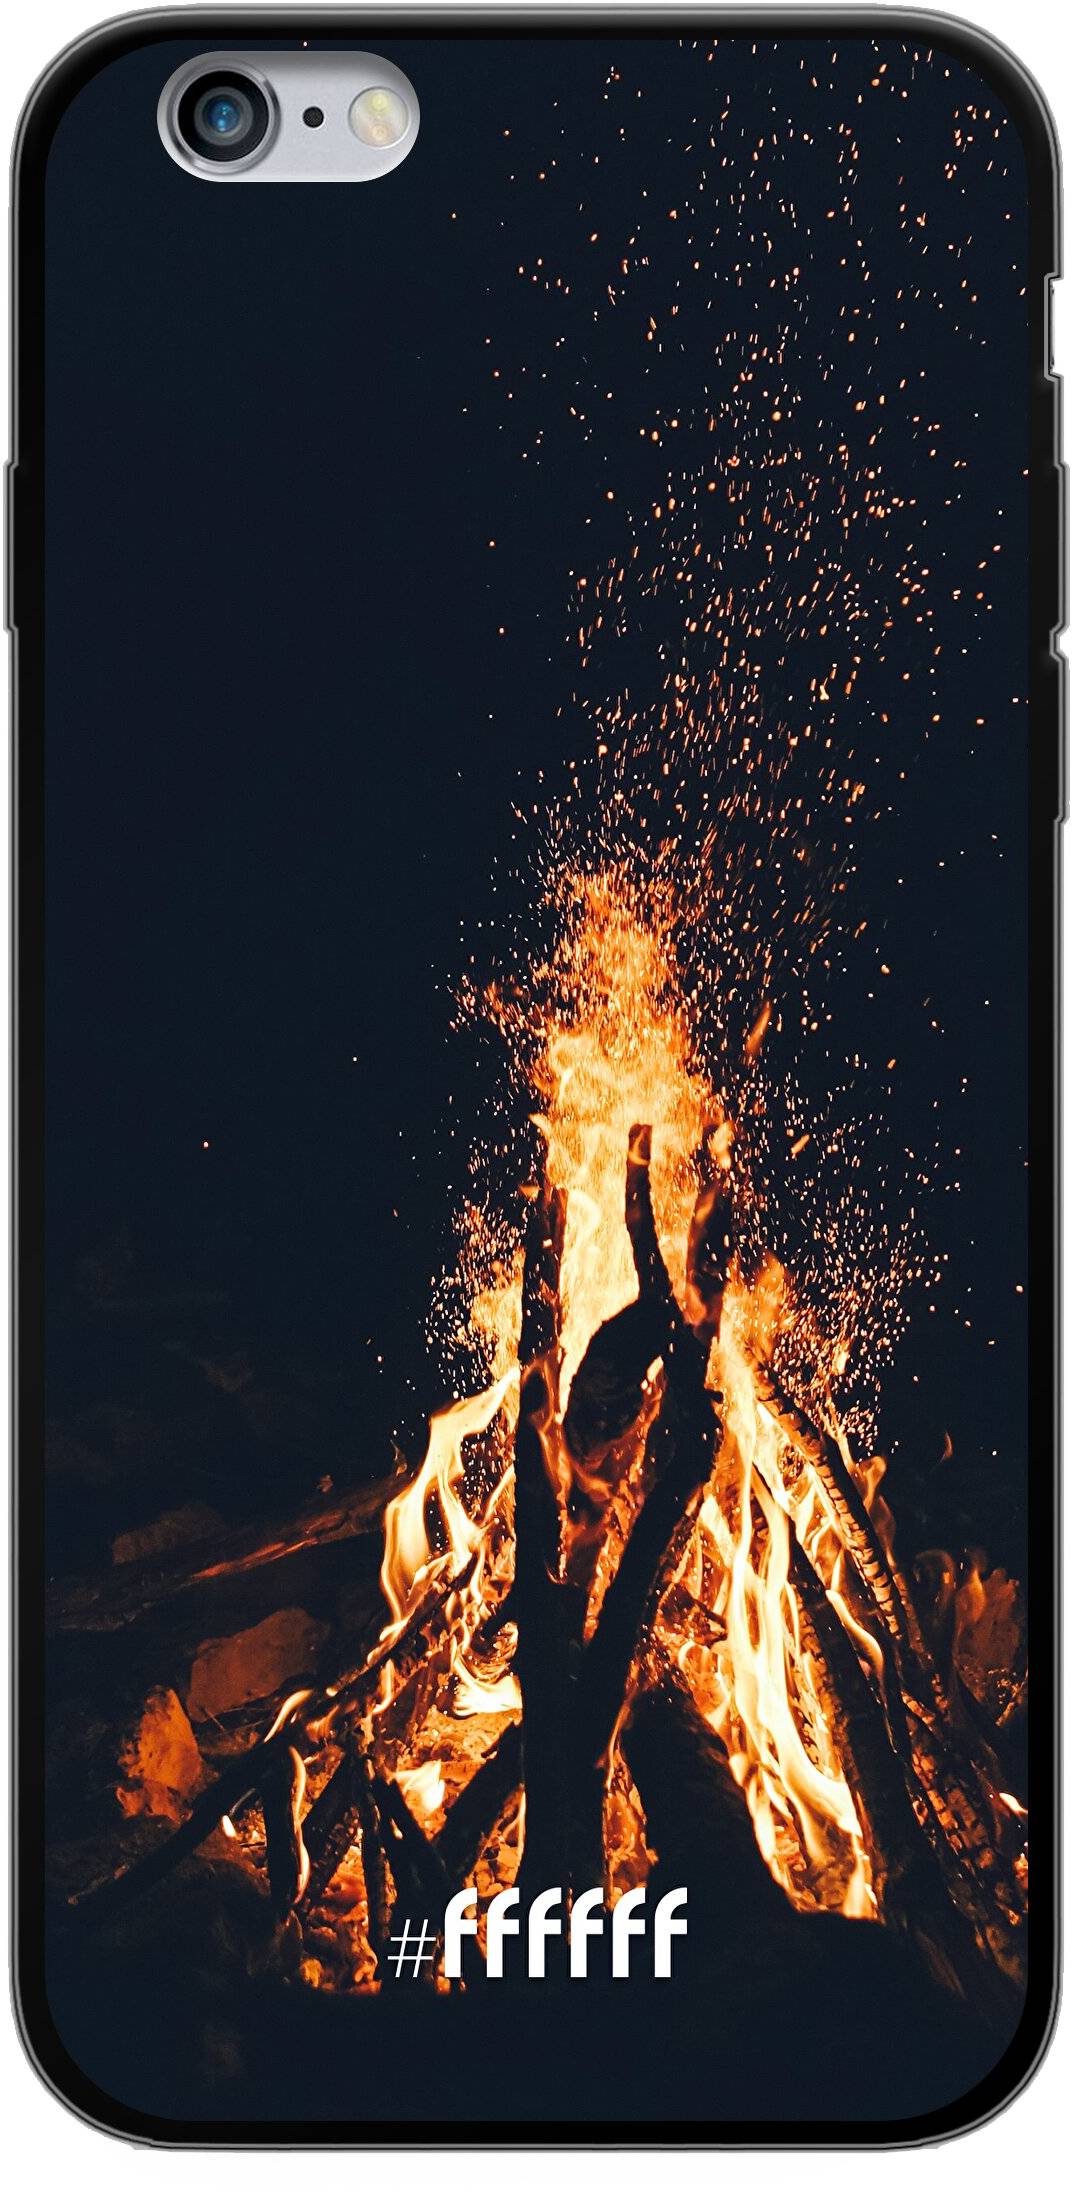 Bonfire iPhone 6